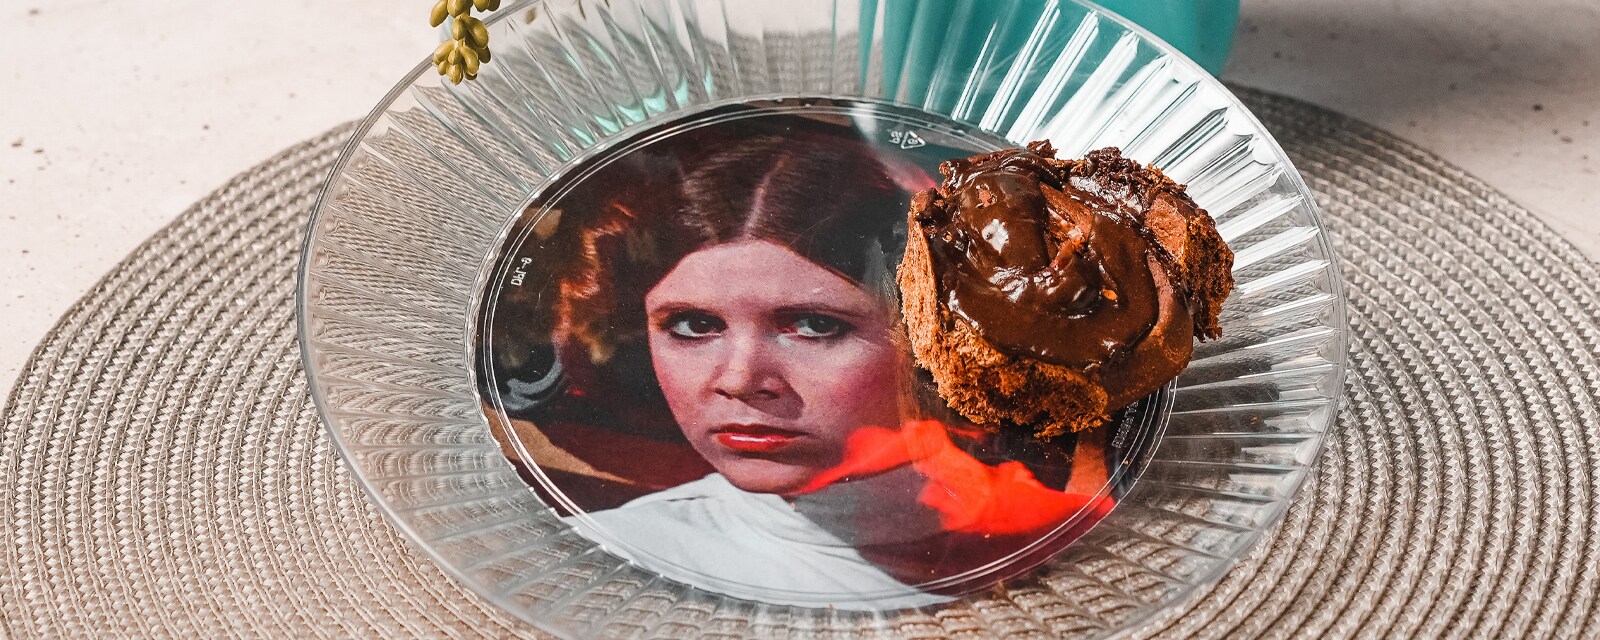 A Princess Leia Dessert Bun snack on a Princess Leia plate.